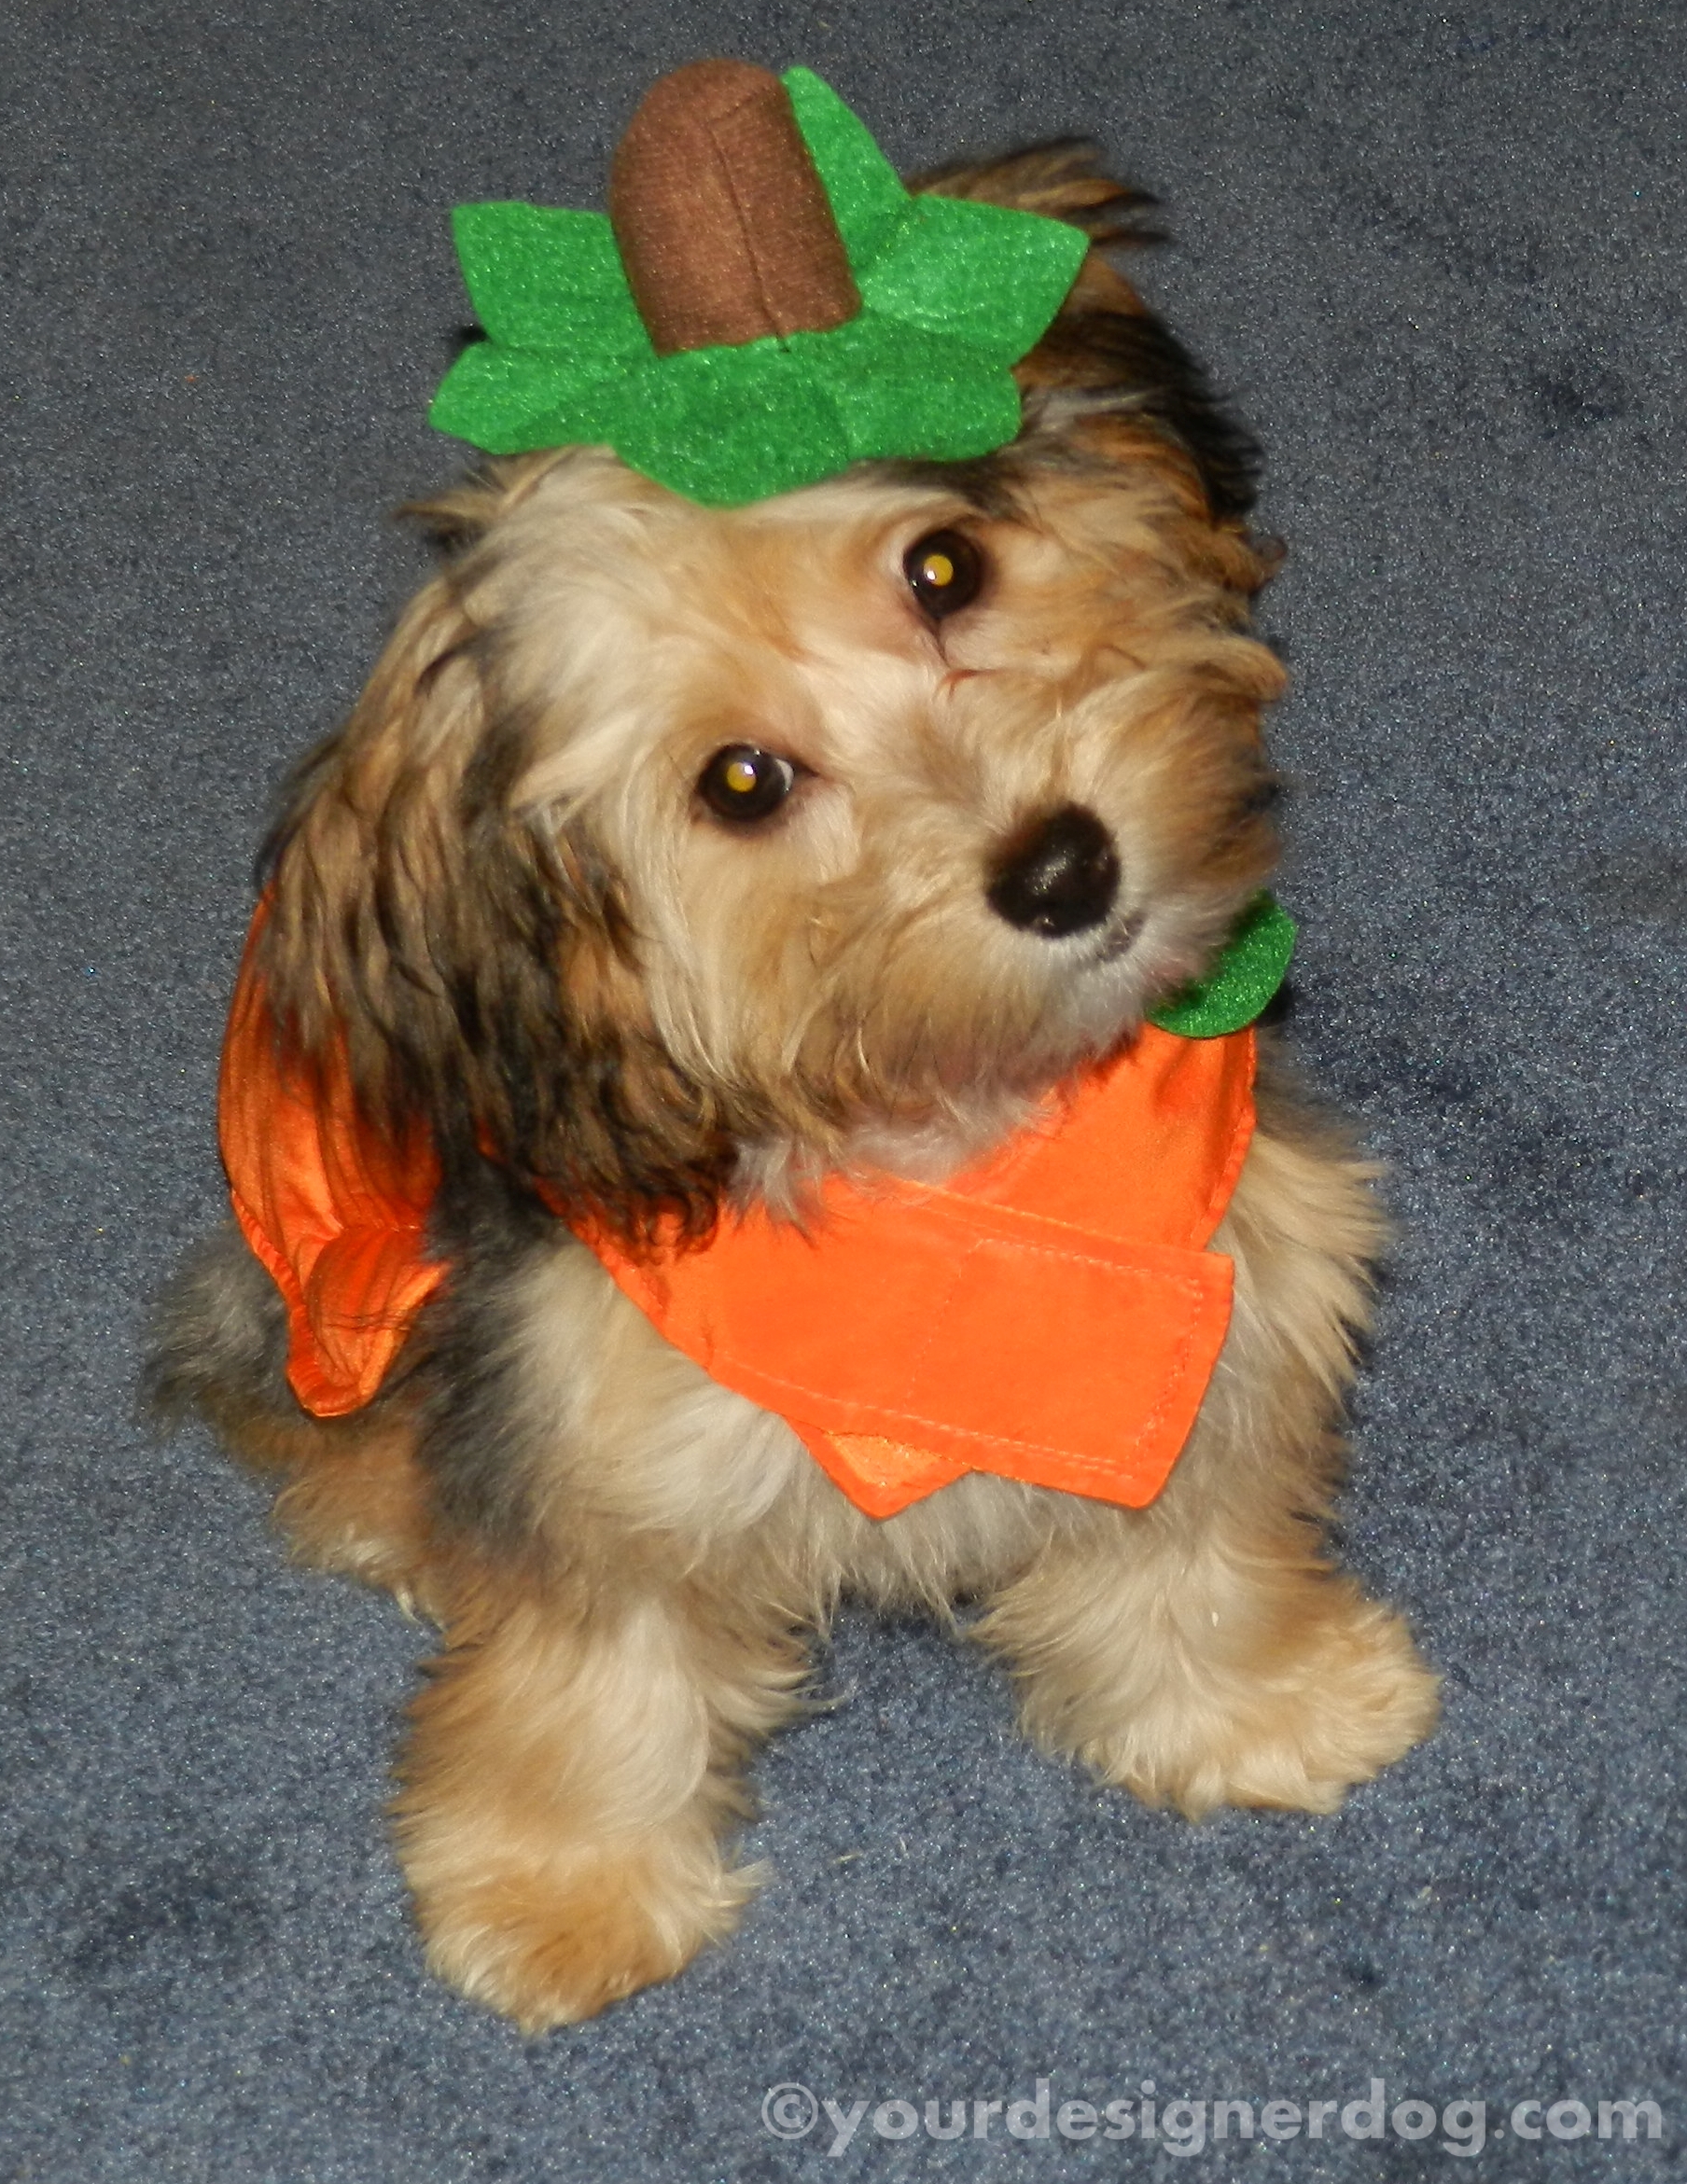 dogs, designer dogs, yorkipoo, yorkie poo, pumpkin, halloween, dog costume